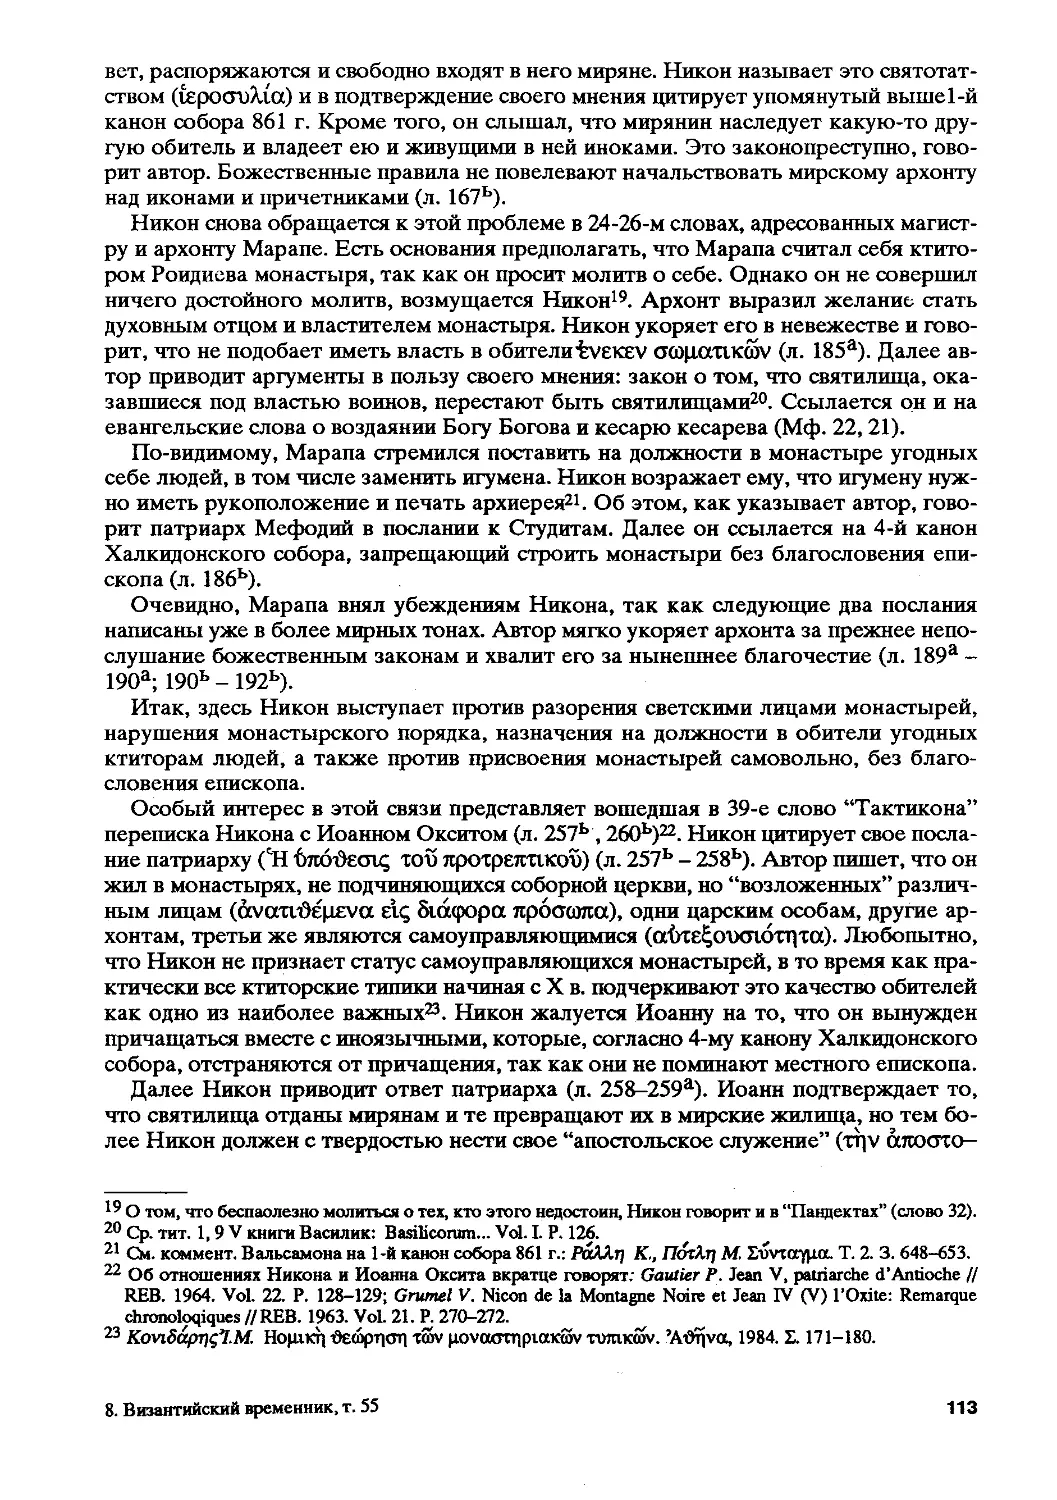 BB 55_1 Á994ù 114.pdf